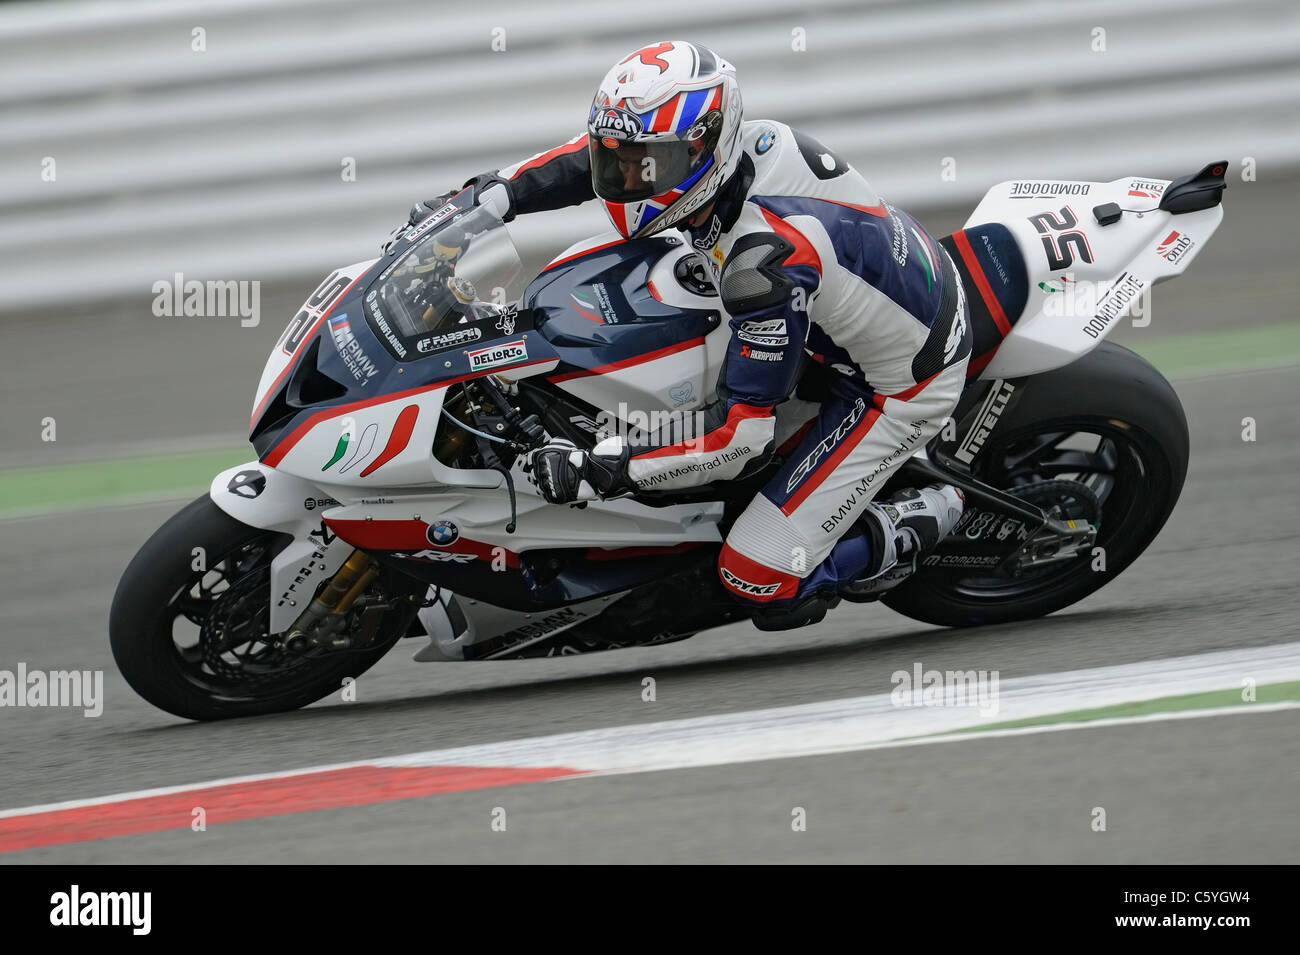 james toseland on the BMW world superbike Stock Photo